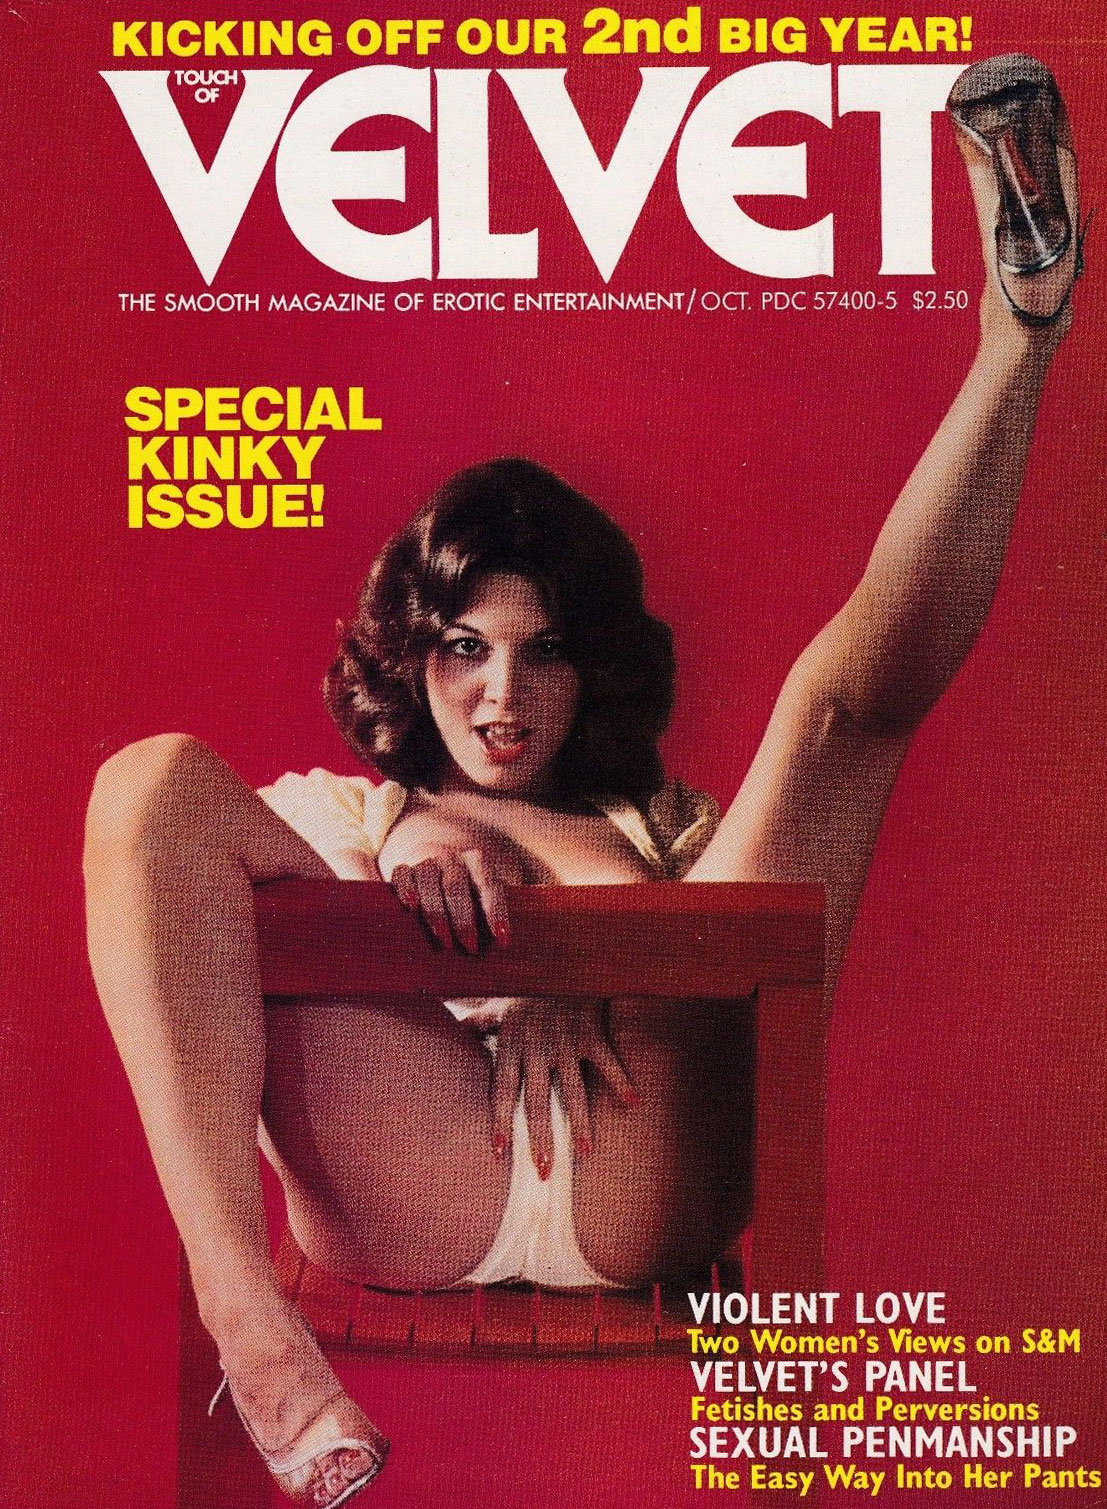 Velvet October 1978 magazine back issue Velvet magizine back copy Velvet October 1978 Adult Top-Shelf Blue Magazine Back Issue Publishing Naked Pornographic X-Rated Images. Special Kinky Issue!.